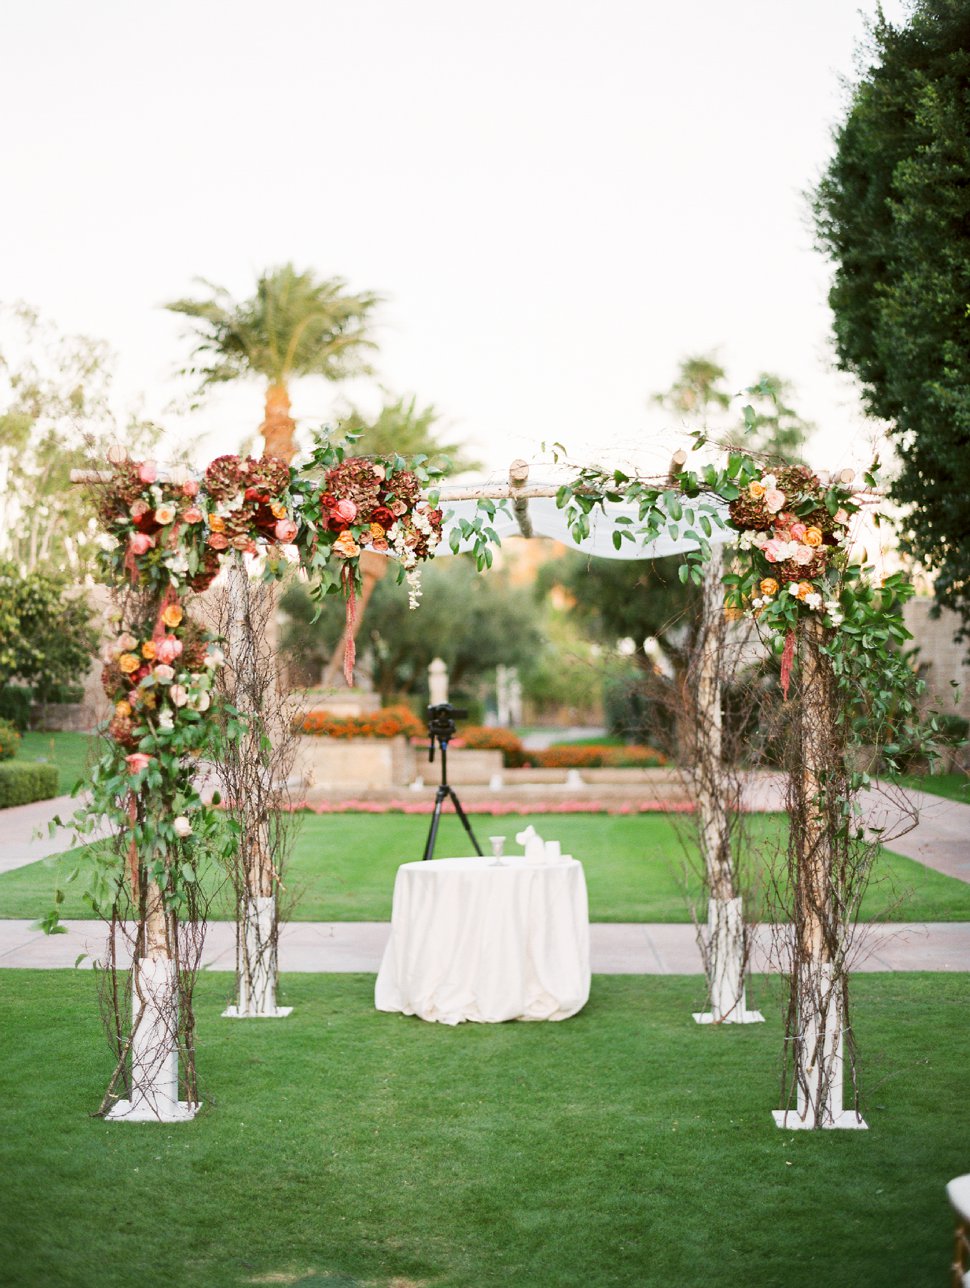 Arizona Biltmore wedding photos - Phoenix Wedding Photographer - Rachel Solomon Photography